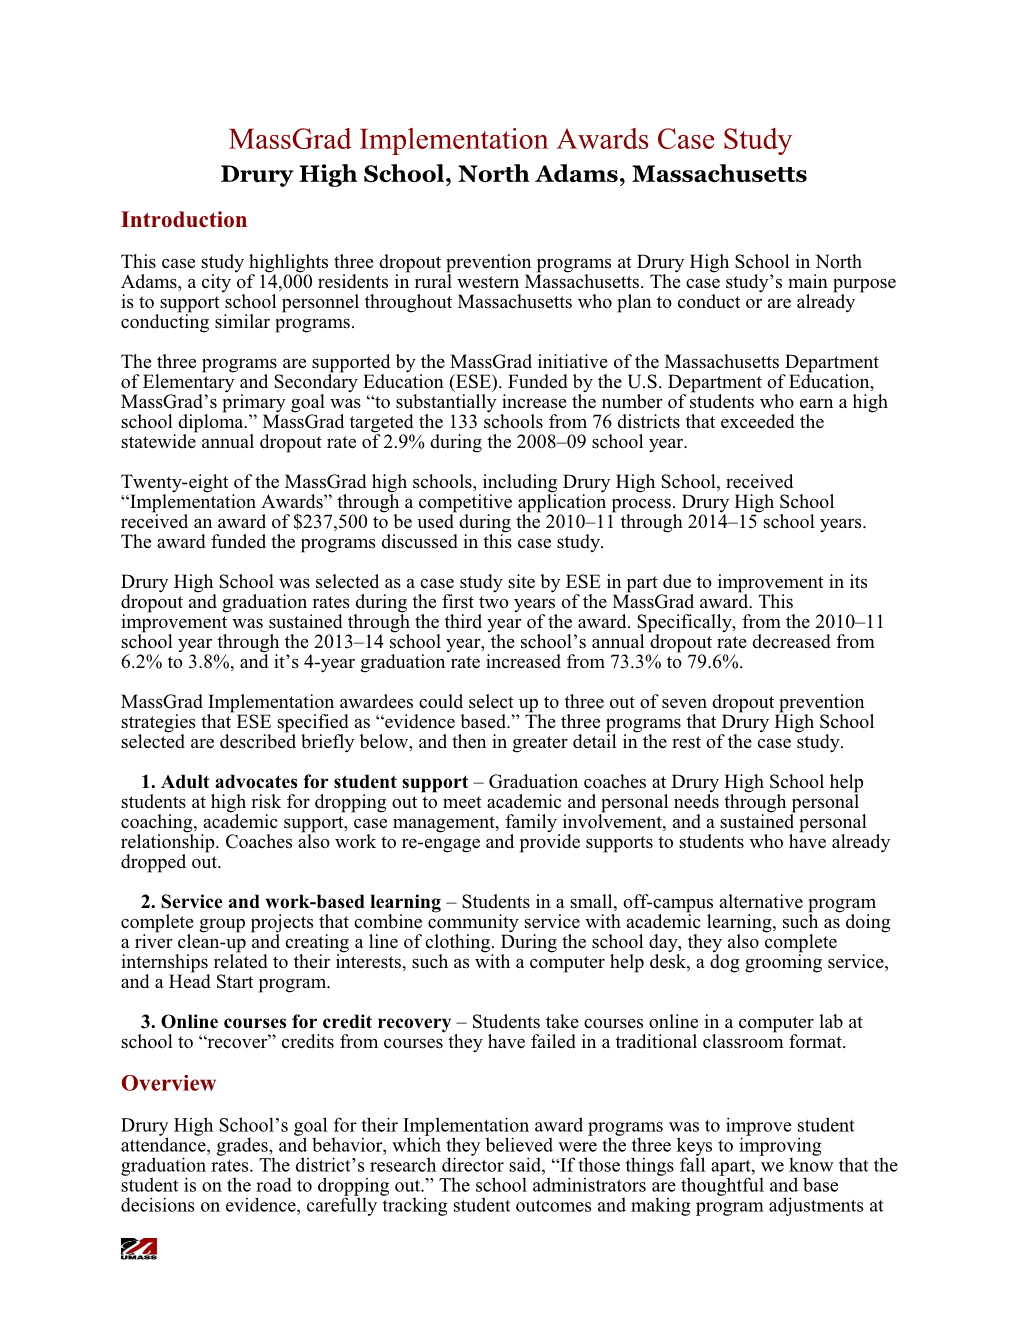 Massgrad Implementation Awards Case Study, North Adams